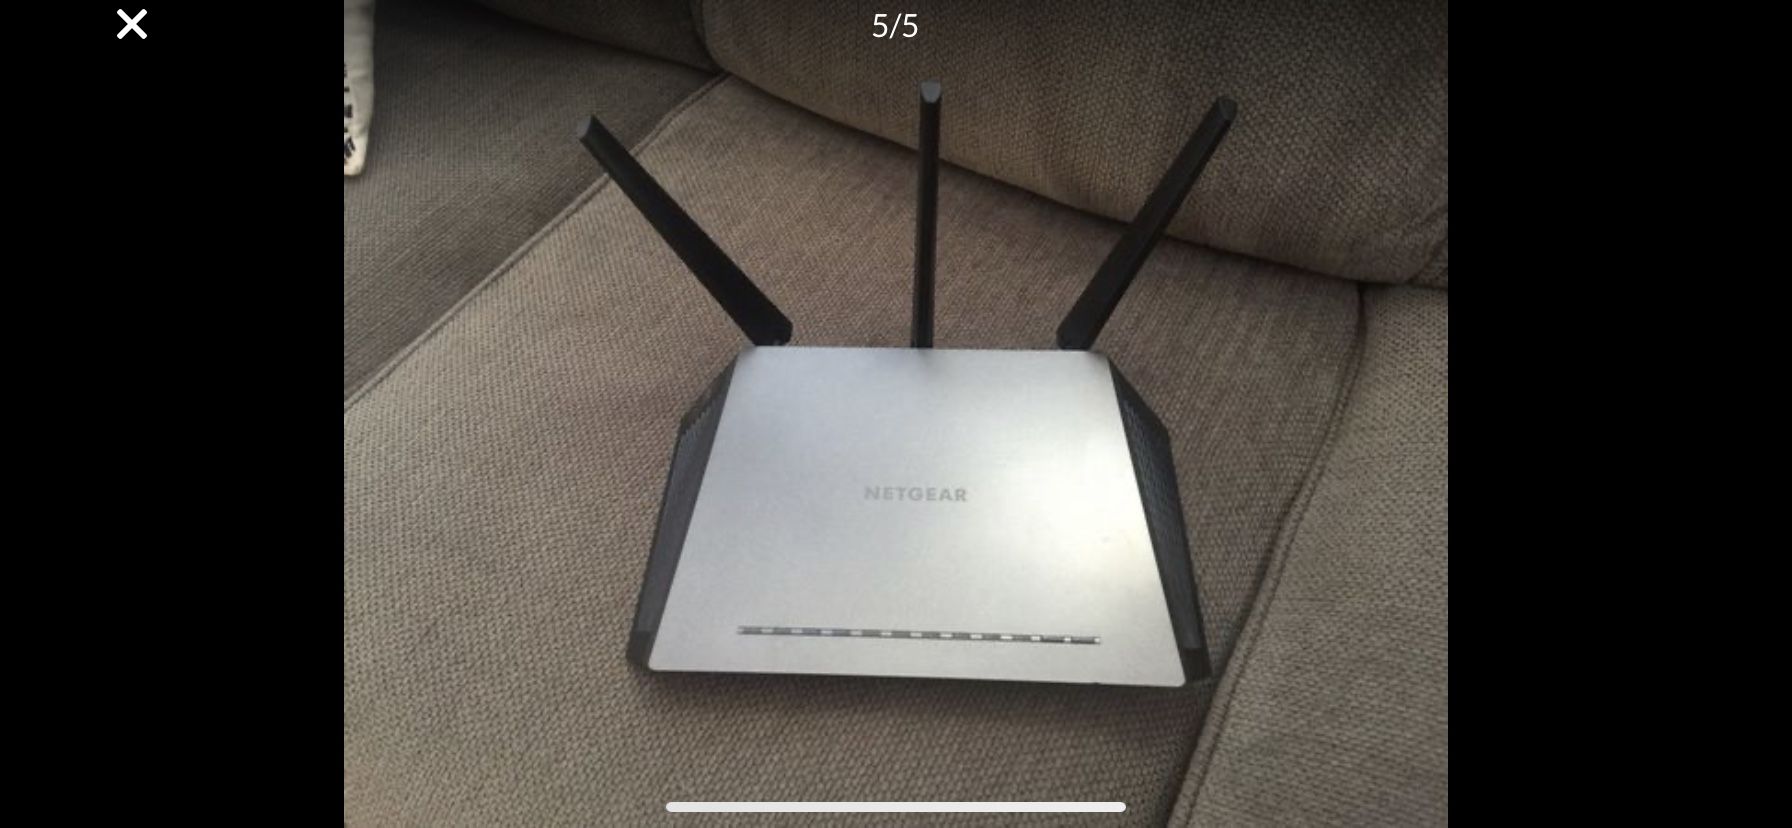 NETGEAR AC 1750 Smart WiFi Router